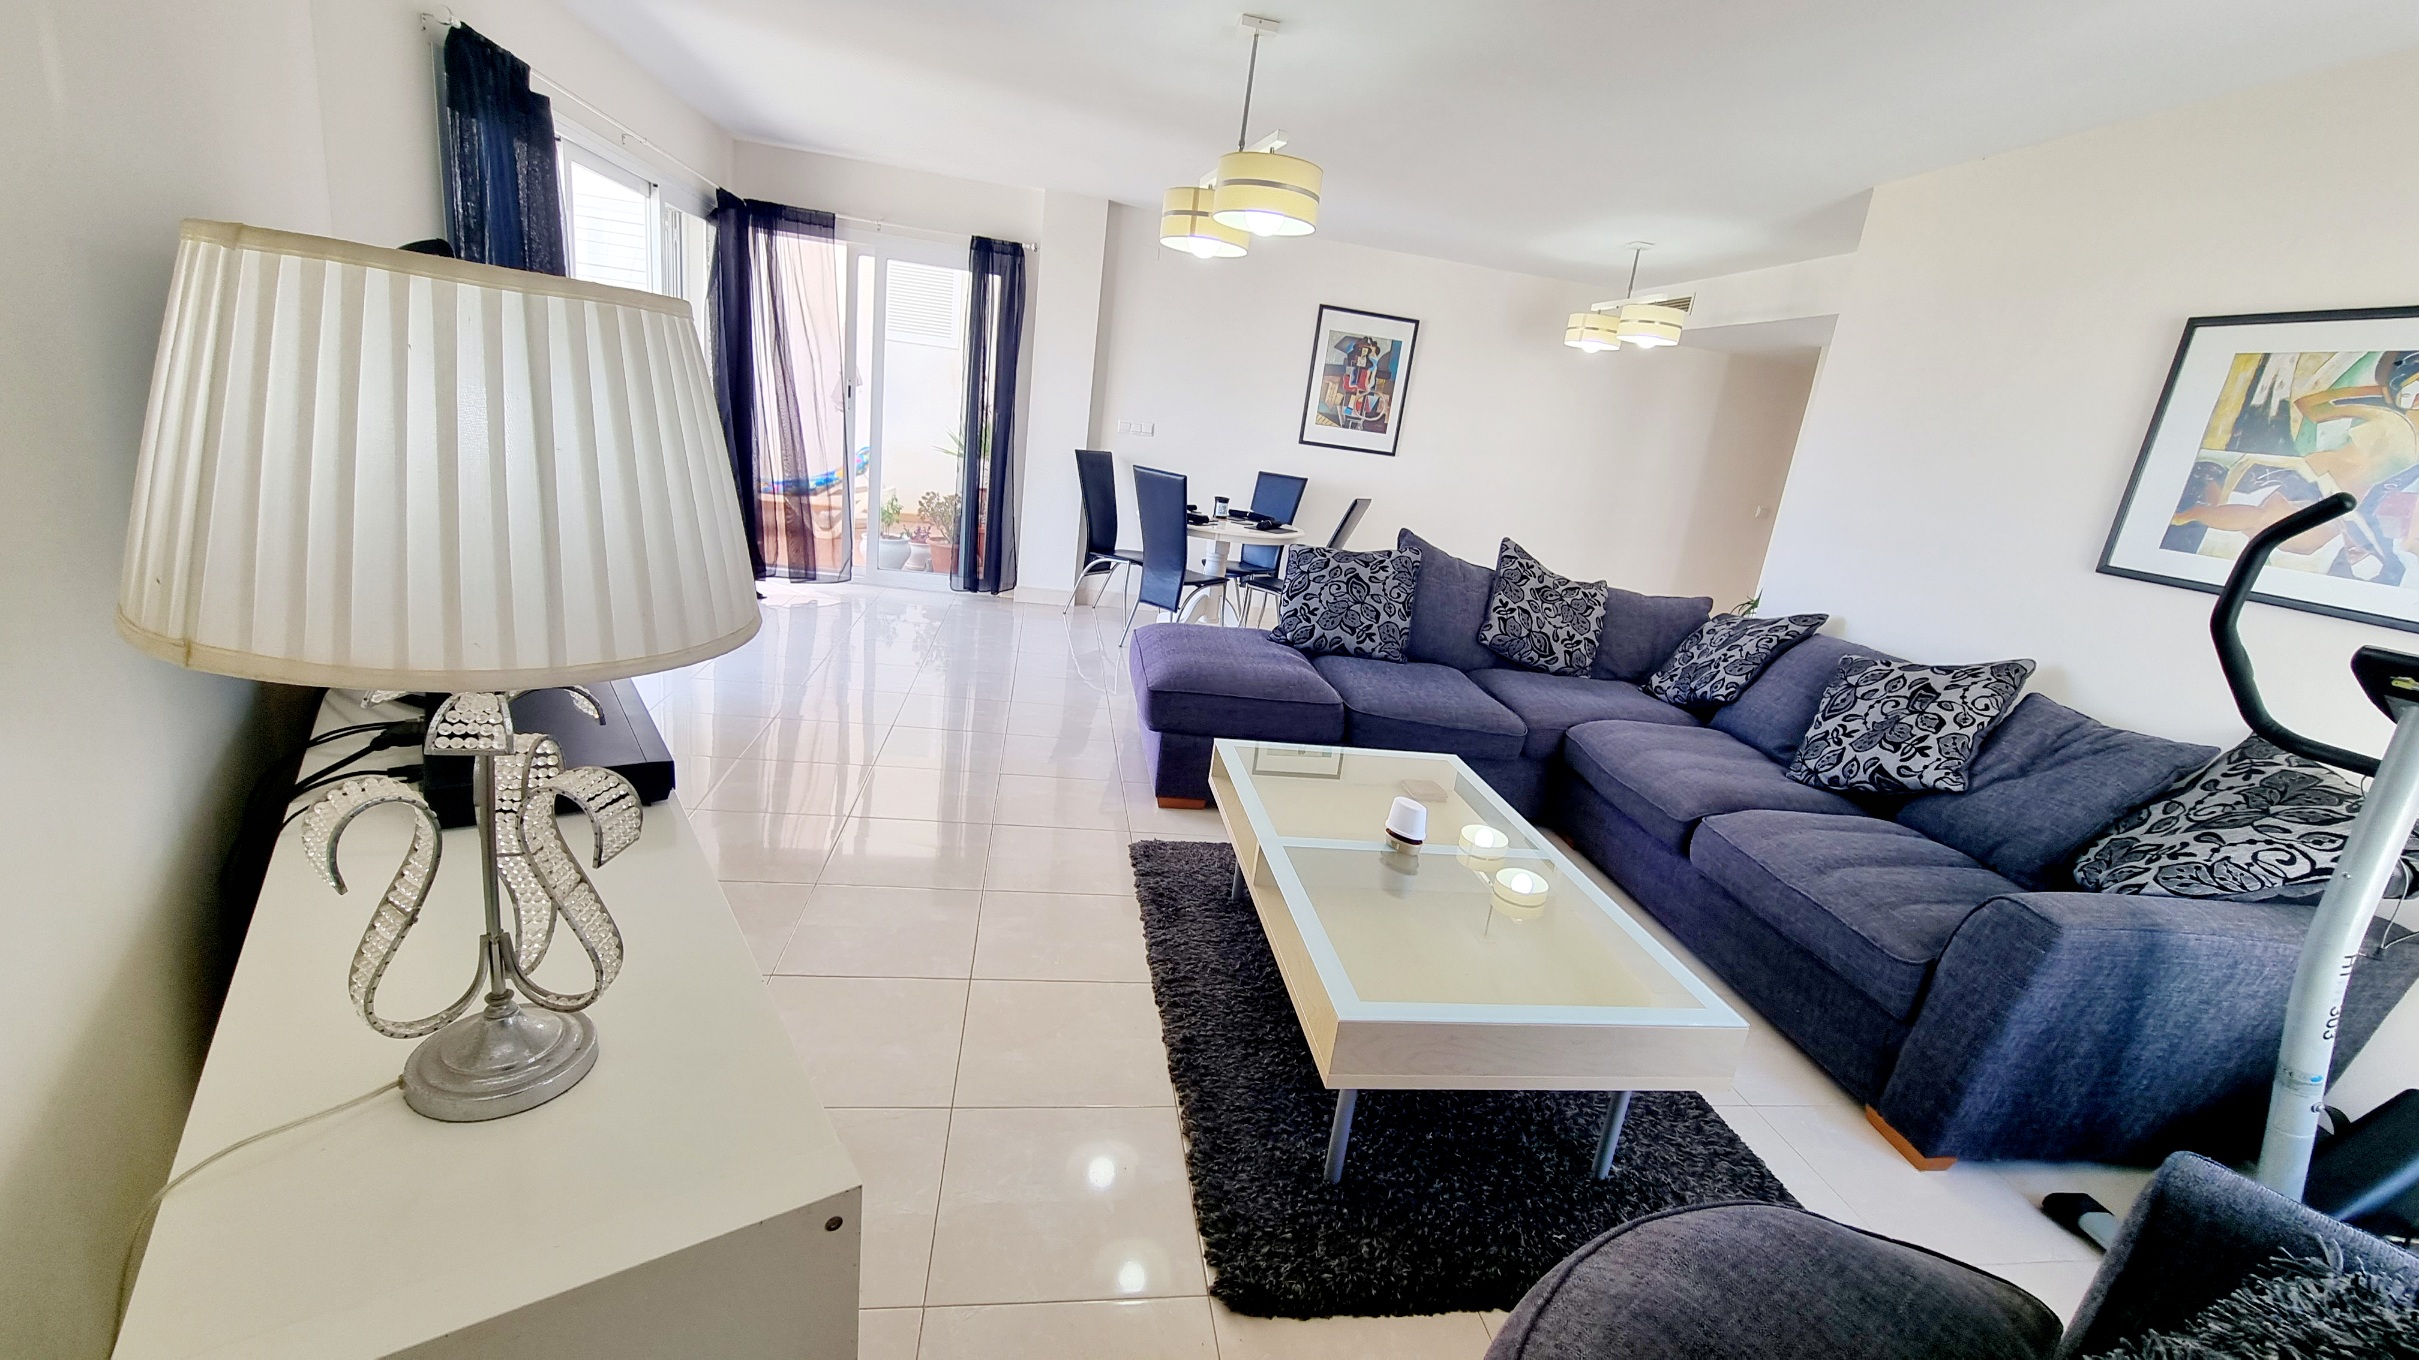 2 bed 2 bath apartment with amazing sea views and large private solarium – Mojacar Almeria